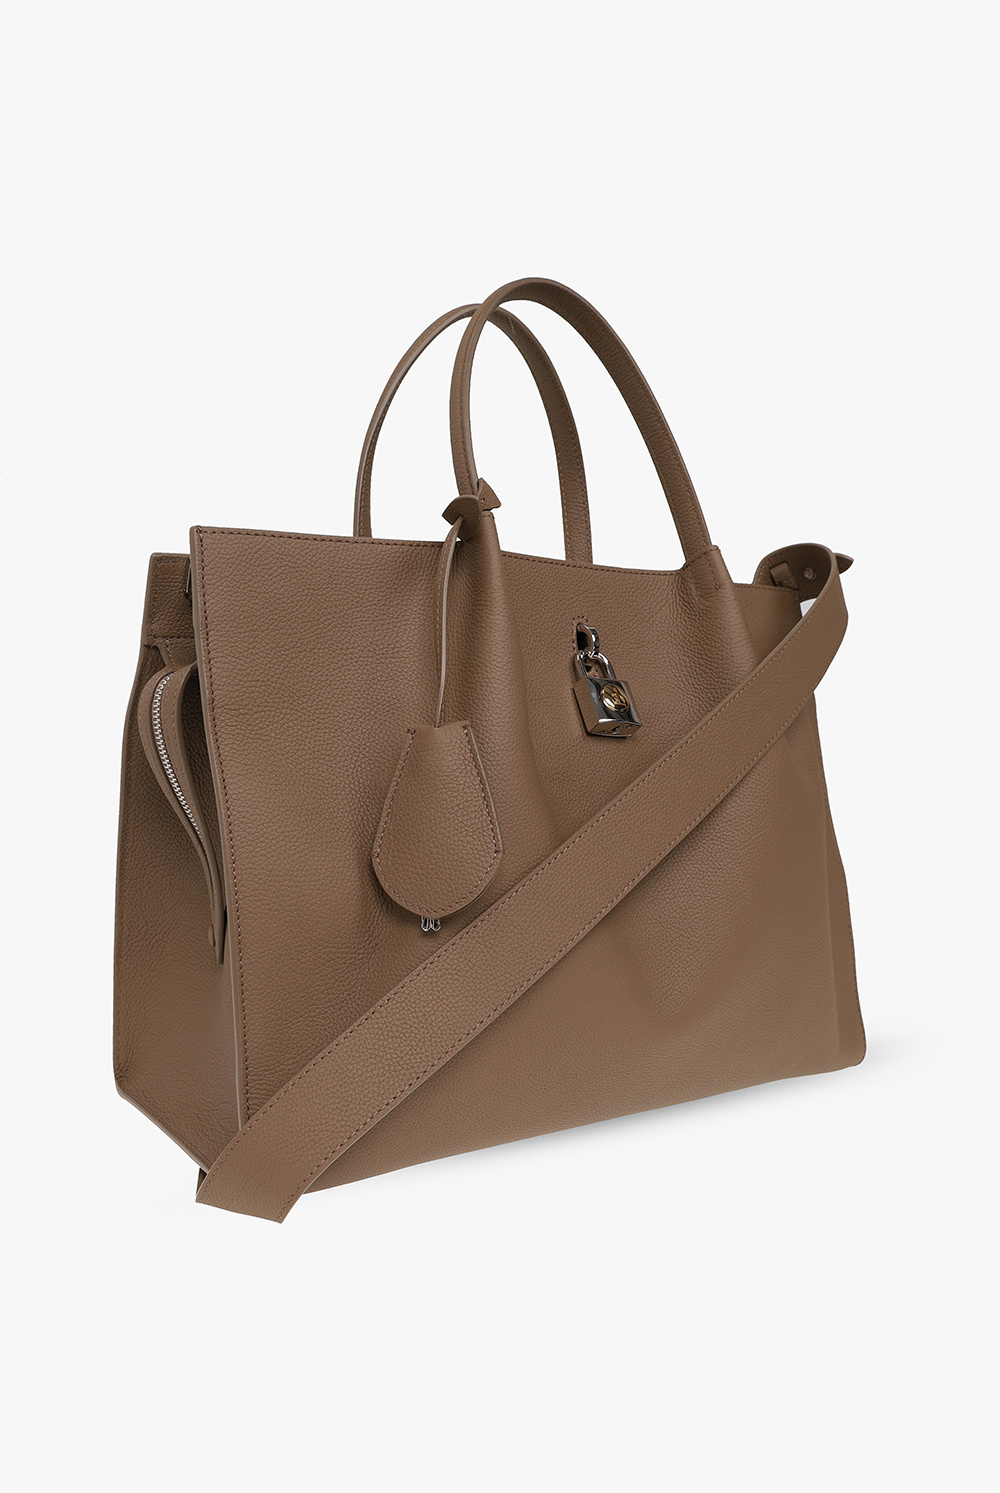 Lanvin ‘Daybag’ shopper Ocean bag